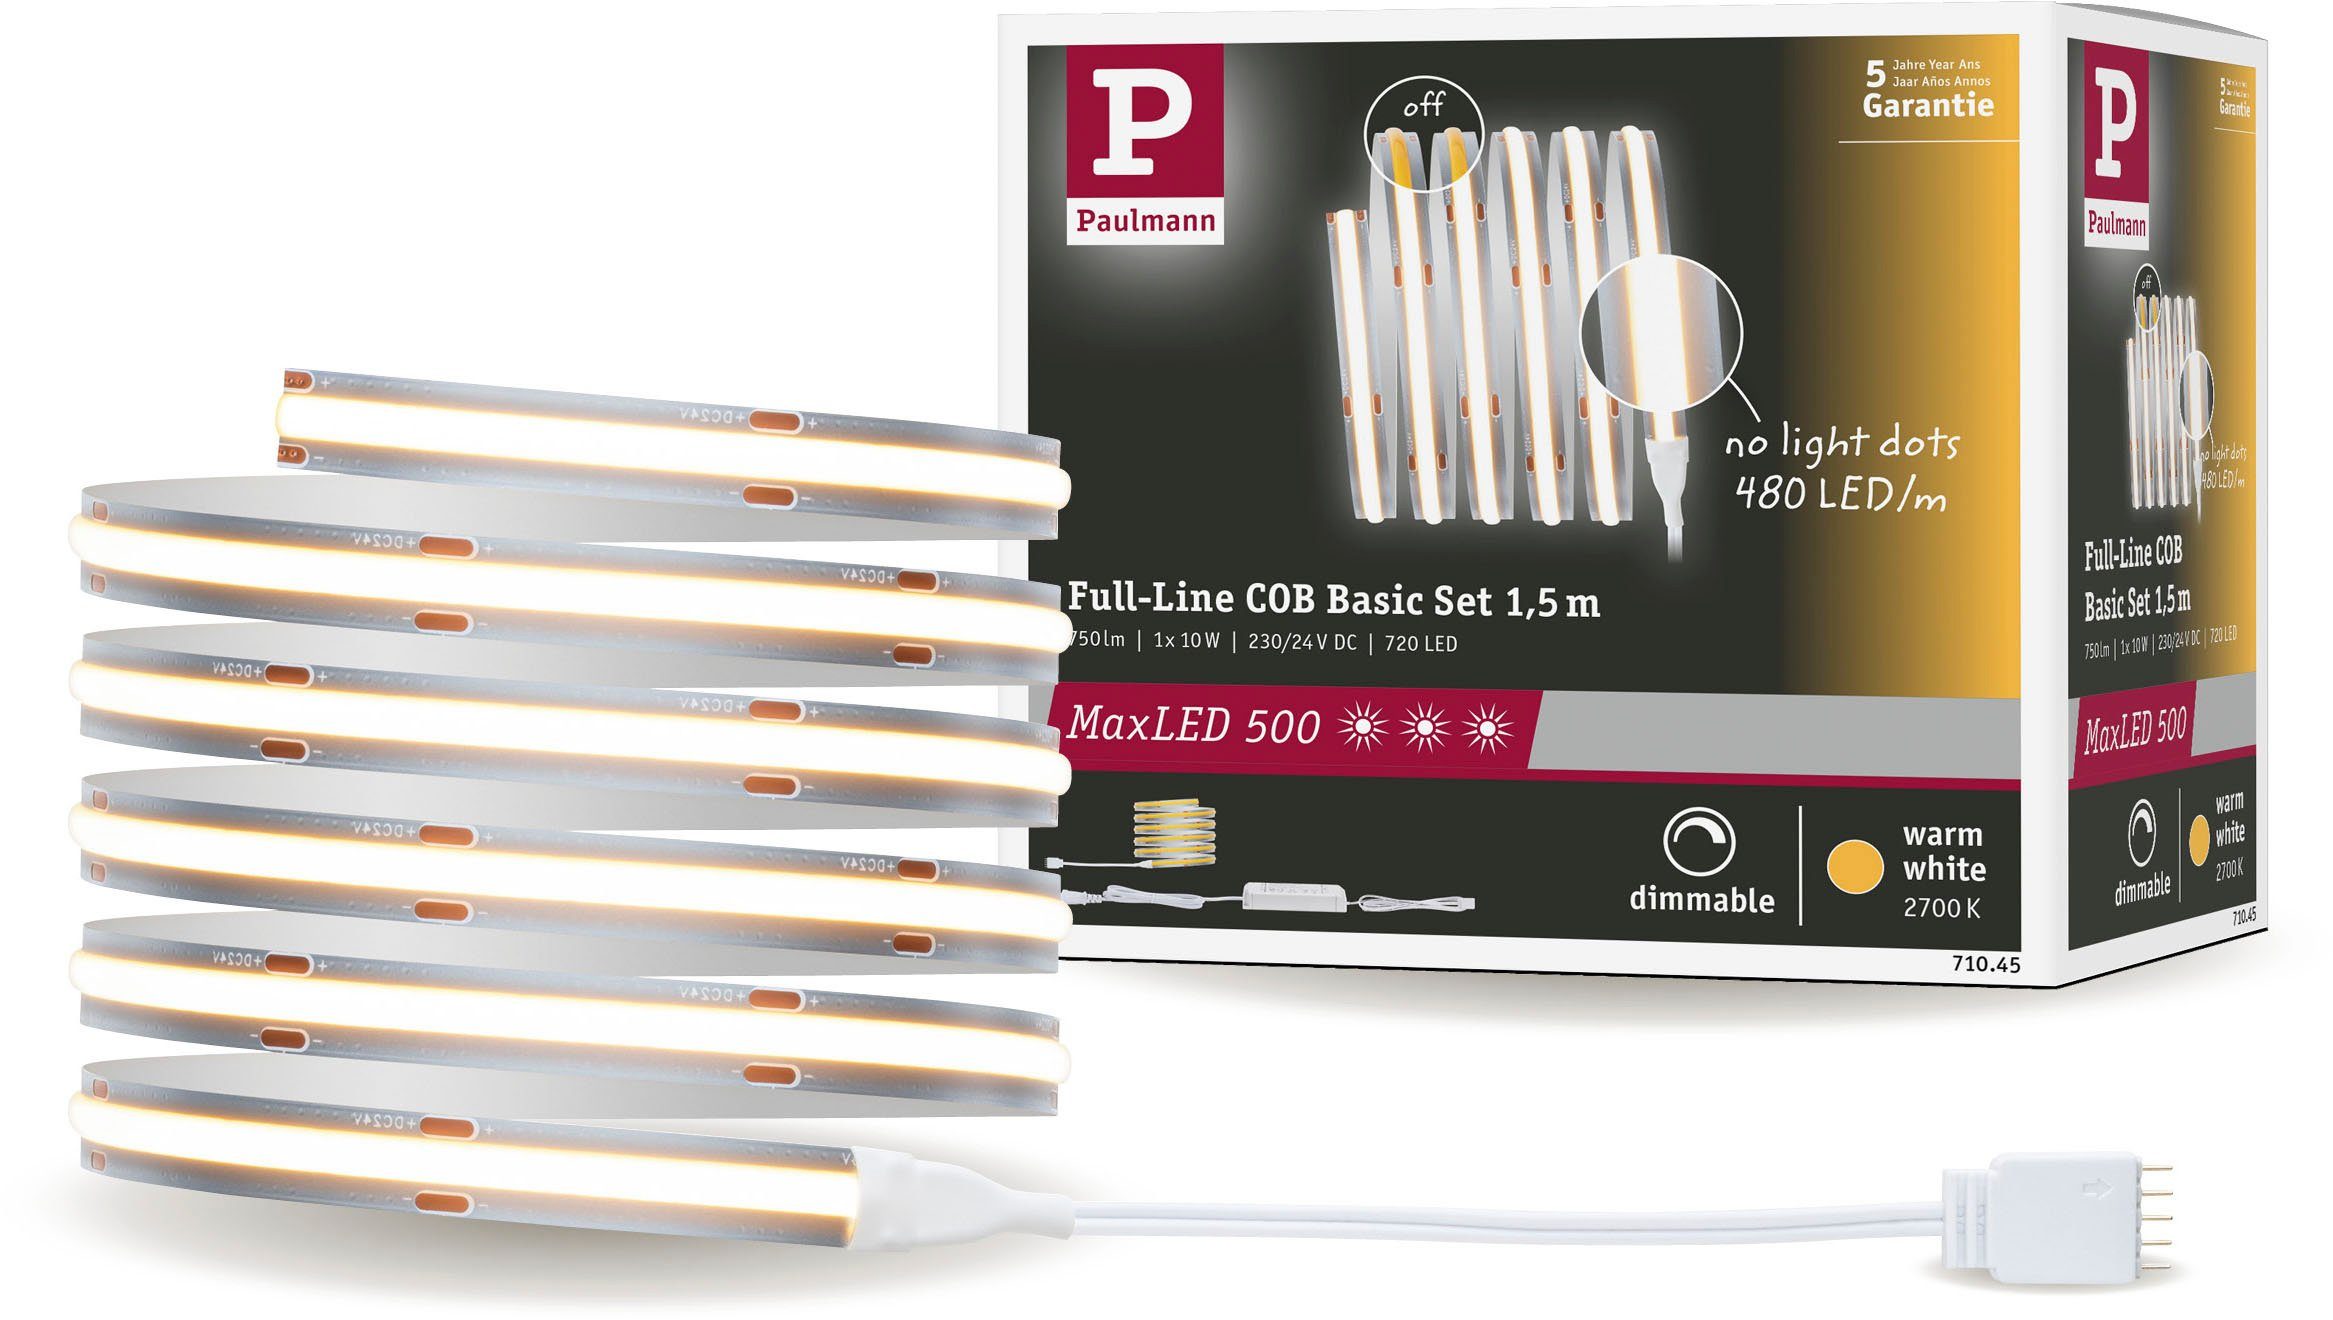 Paulmann LED-Streifen 480LED warmweiß10W 1,5m, 1-flammig, 500 Basisset Full-Line COB 750lm Basisset MaxLED 2700K